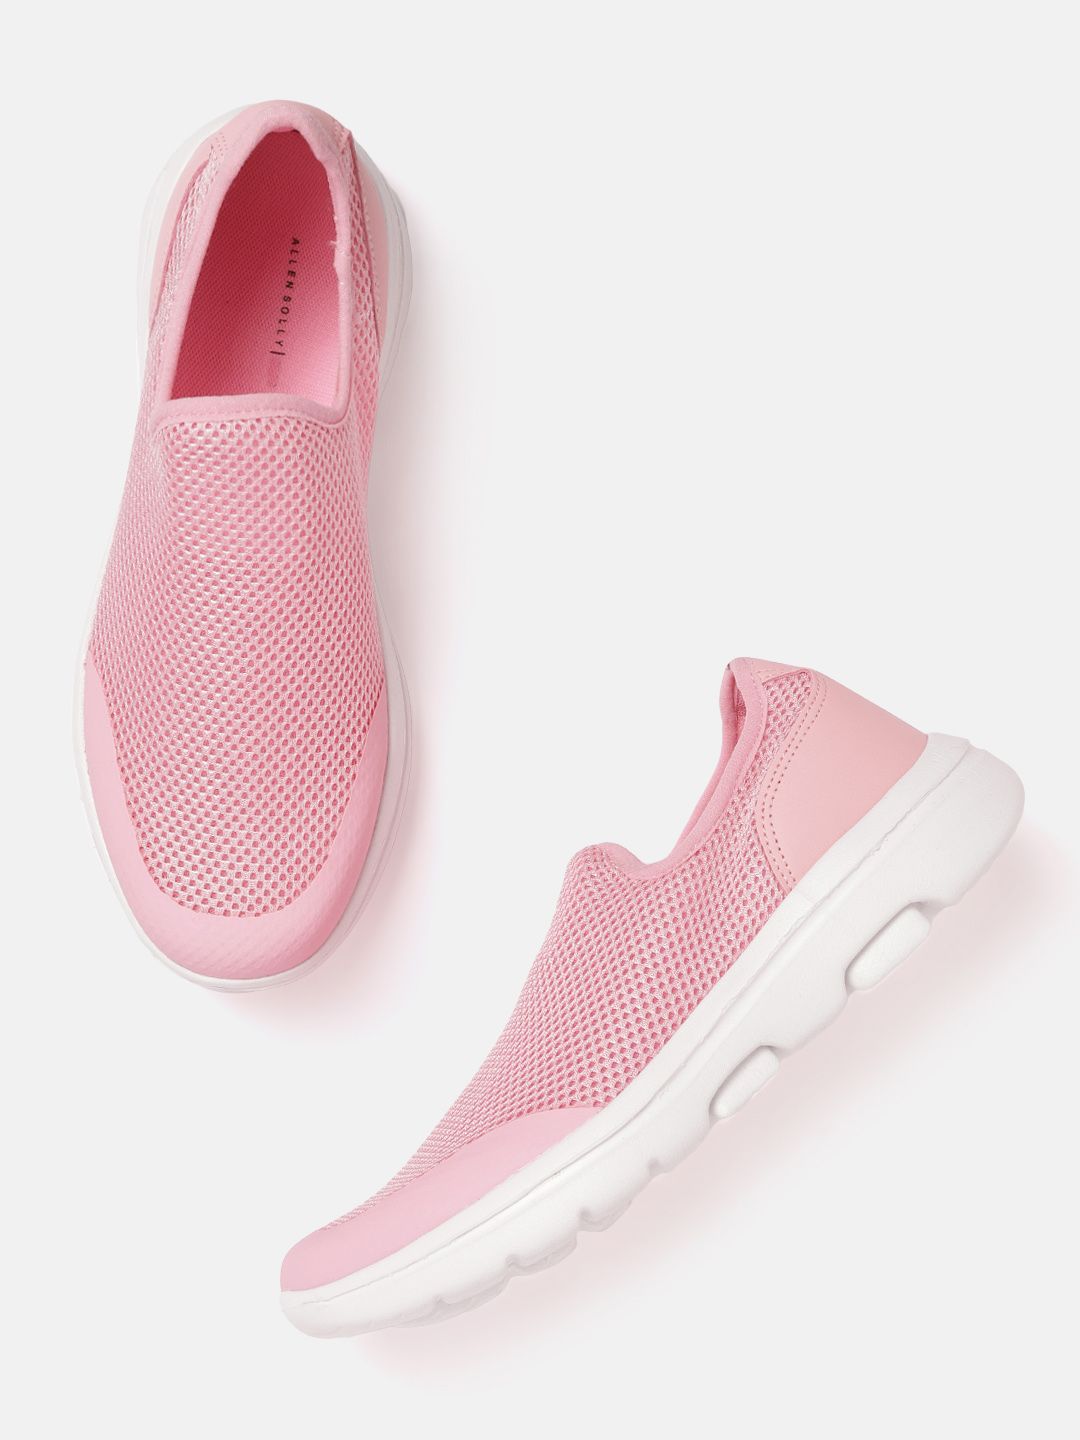 Allen Solly Women Pink Woven Design Slip-On Sneakers Price in India